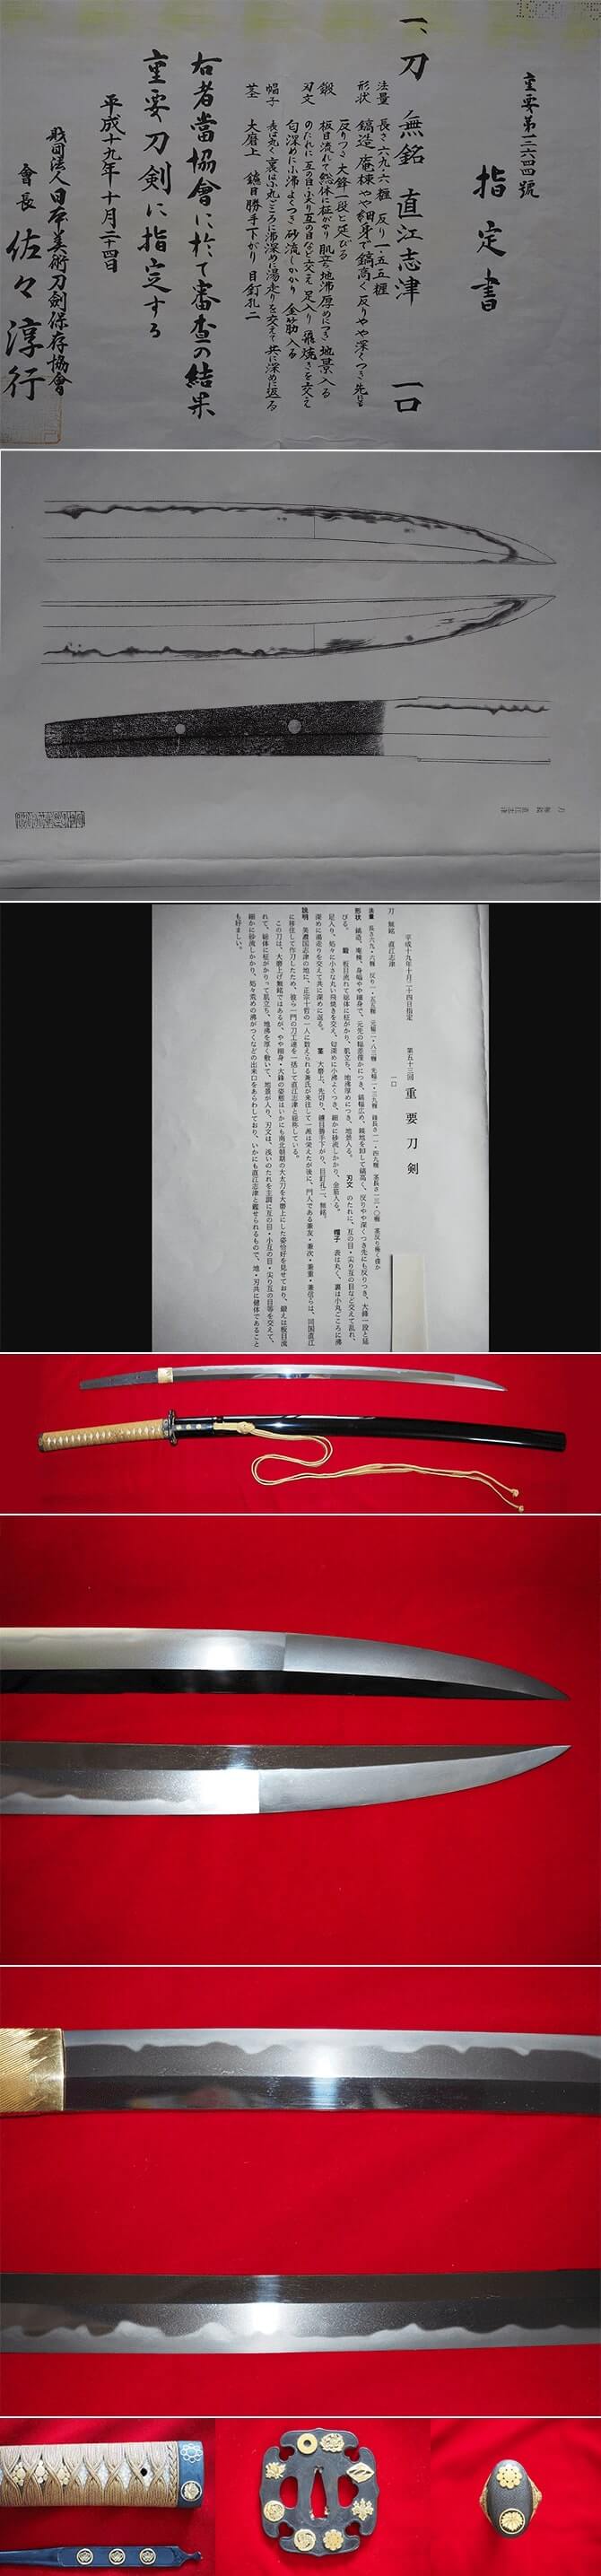 重要刀剣-001　tachi001.html